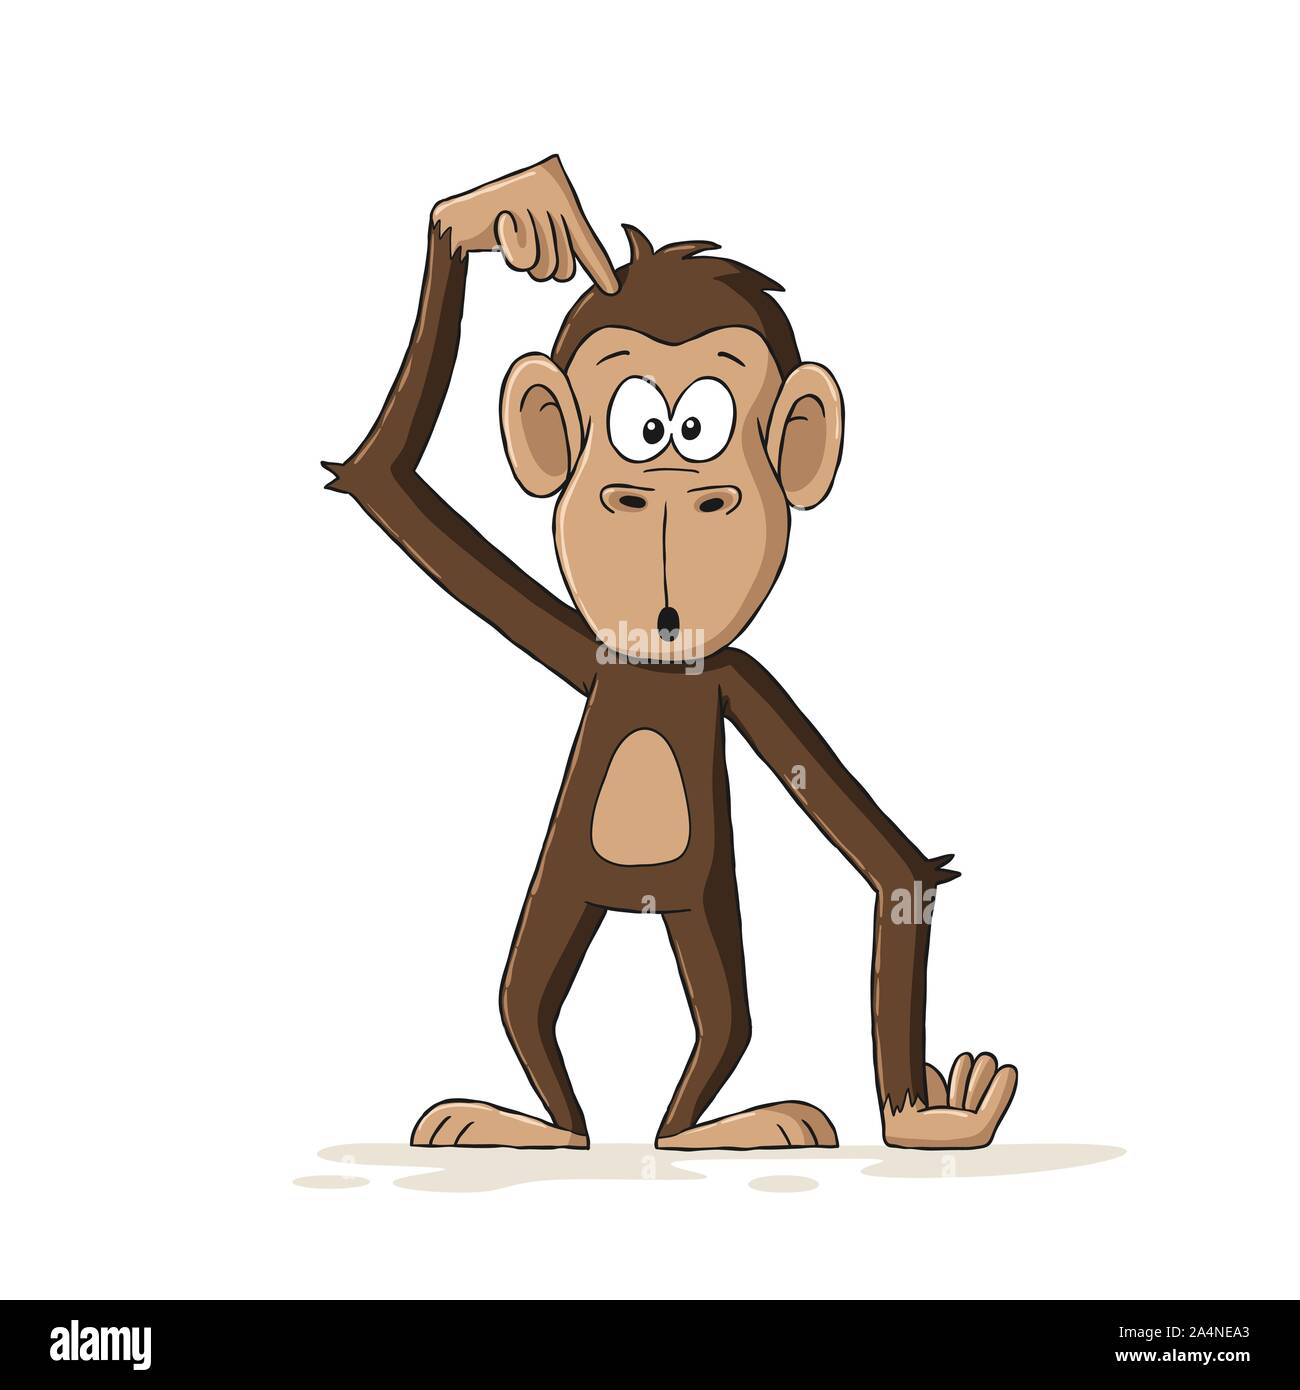 Funny cartoon monkey. Hand drawn vector illustration avec des calques distincts. Illustration de Vecteur